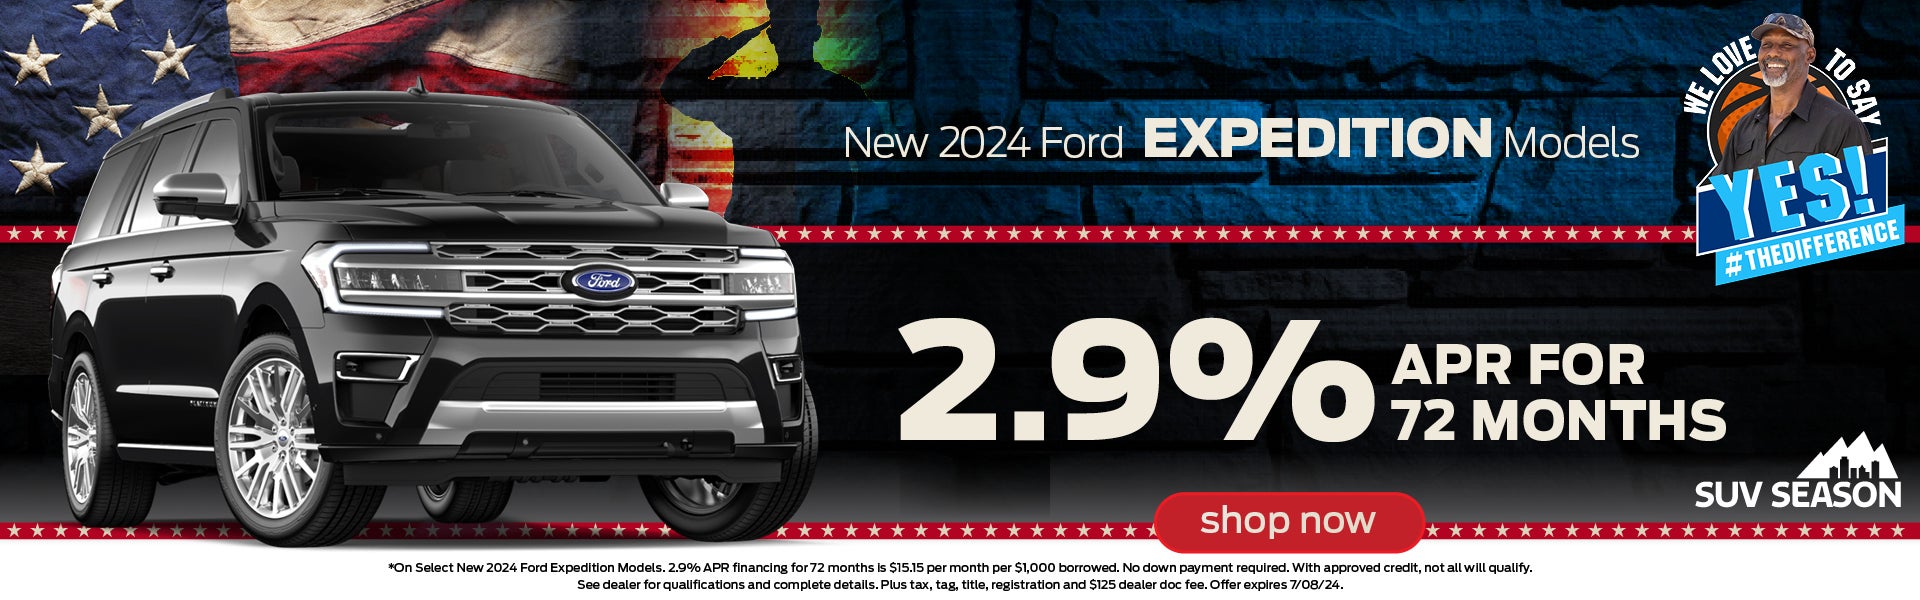 New 2024 Ford Expedition Models in El Dorado AR